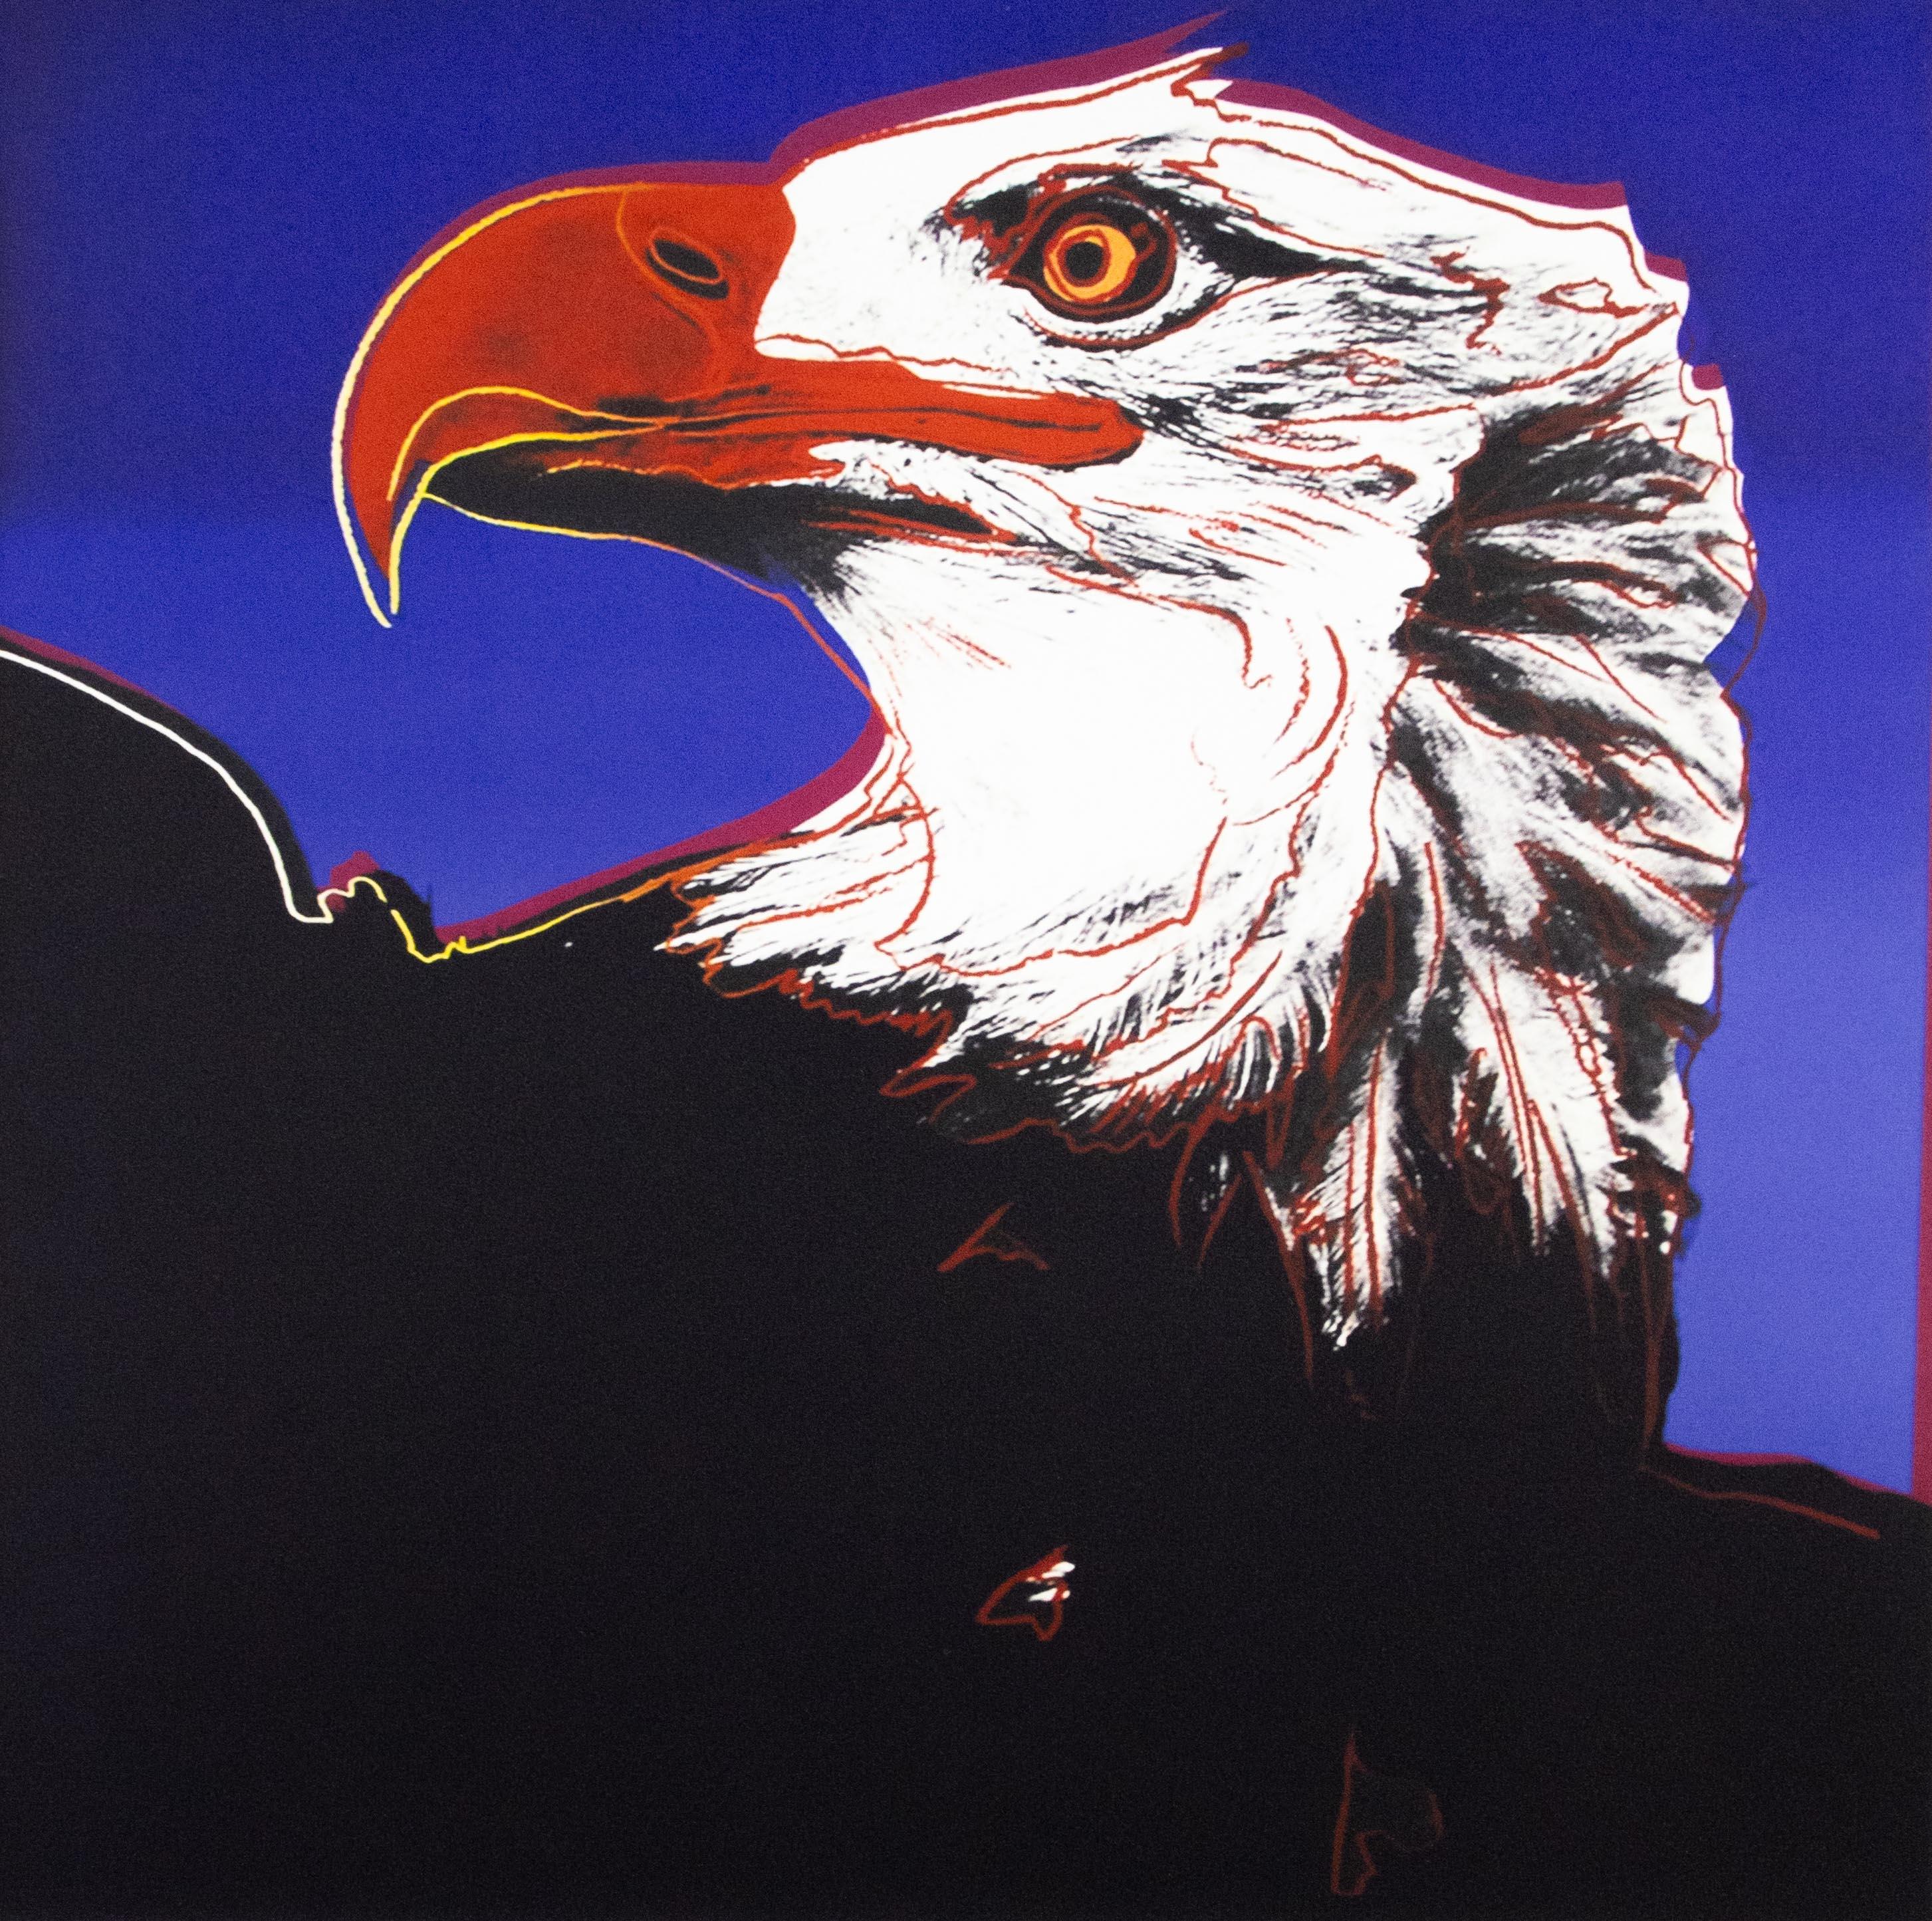 Andy Warhol Portrait Print - Bald Eagle - 1983 - Original Lithograph - Limited Edition Print - 40/100 pcs.